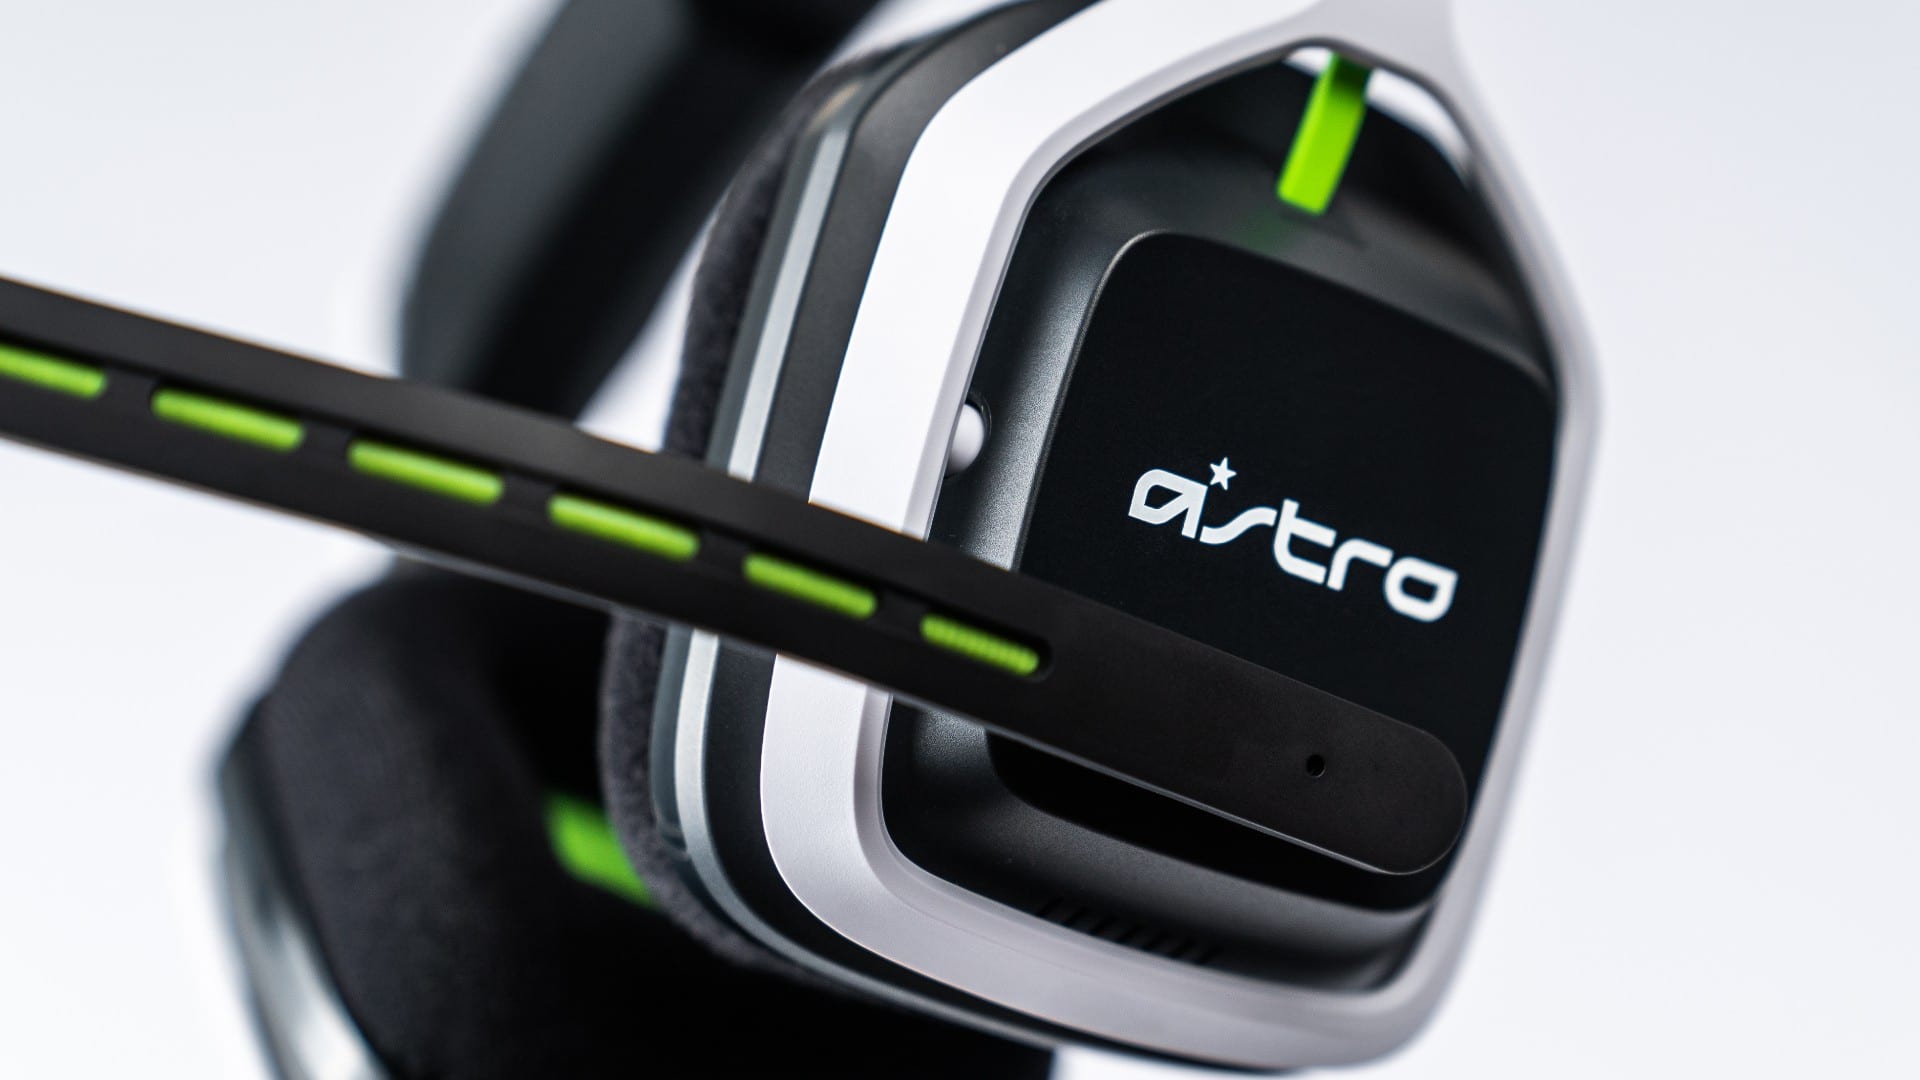 Astro A20 Wireless Gen 2 review